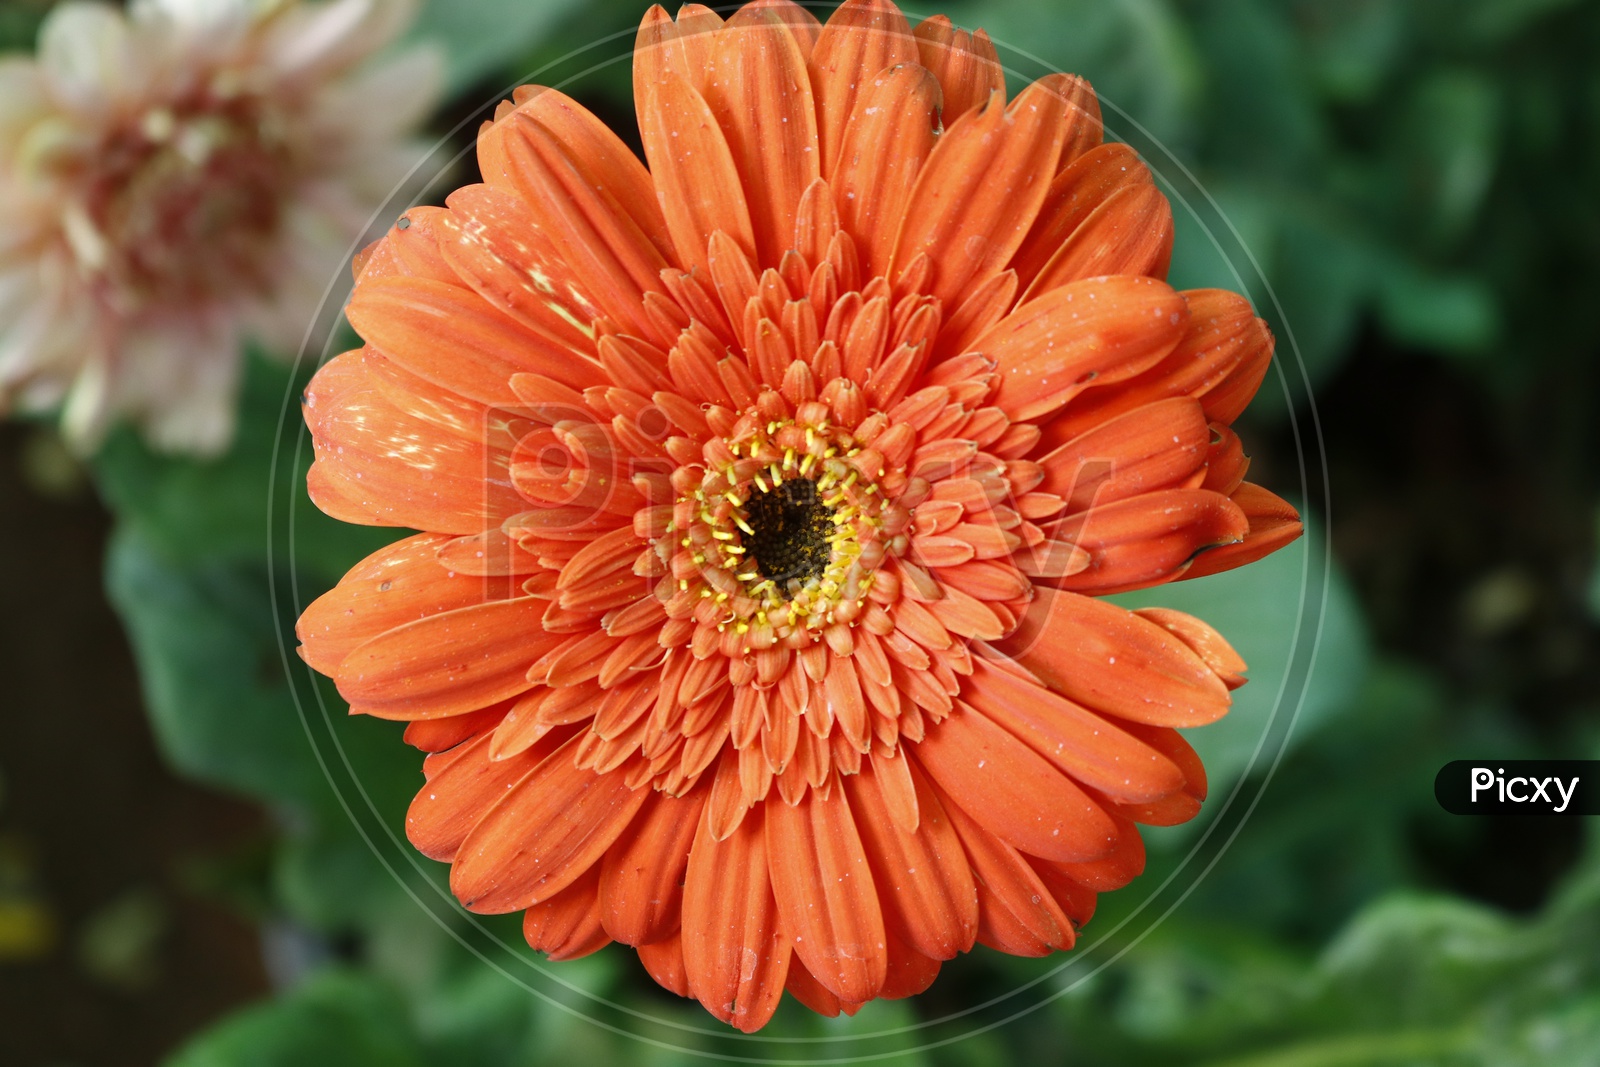 Close up of a Orange flower